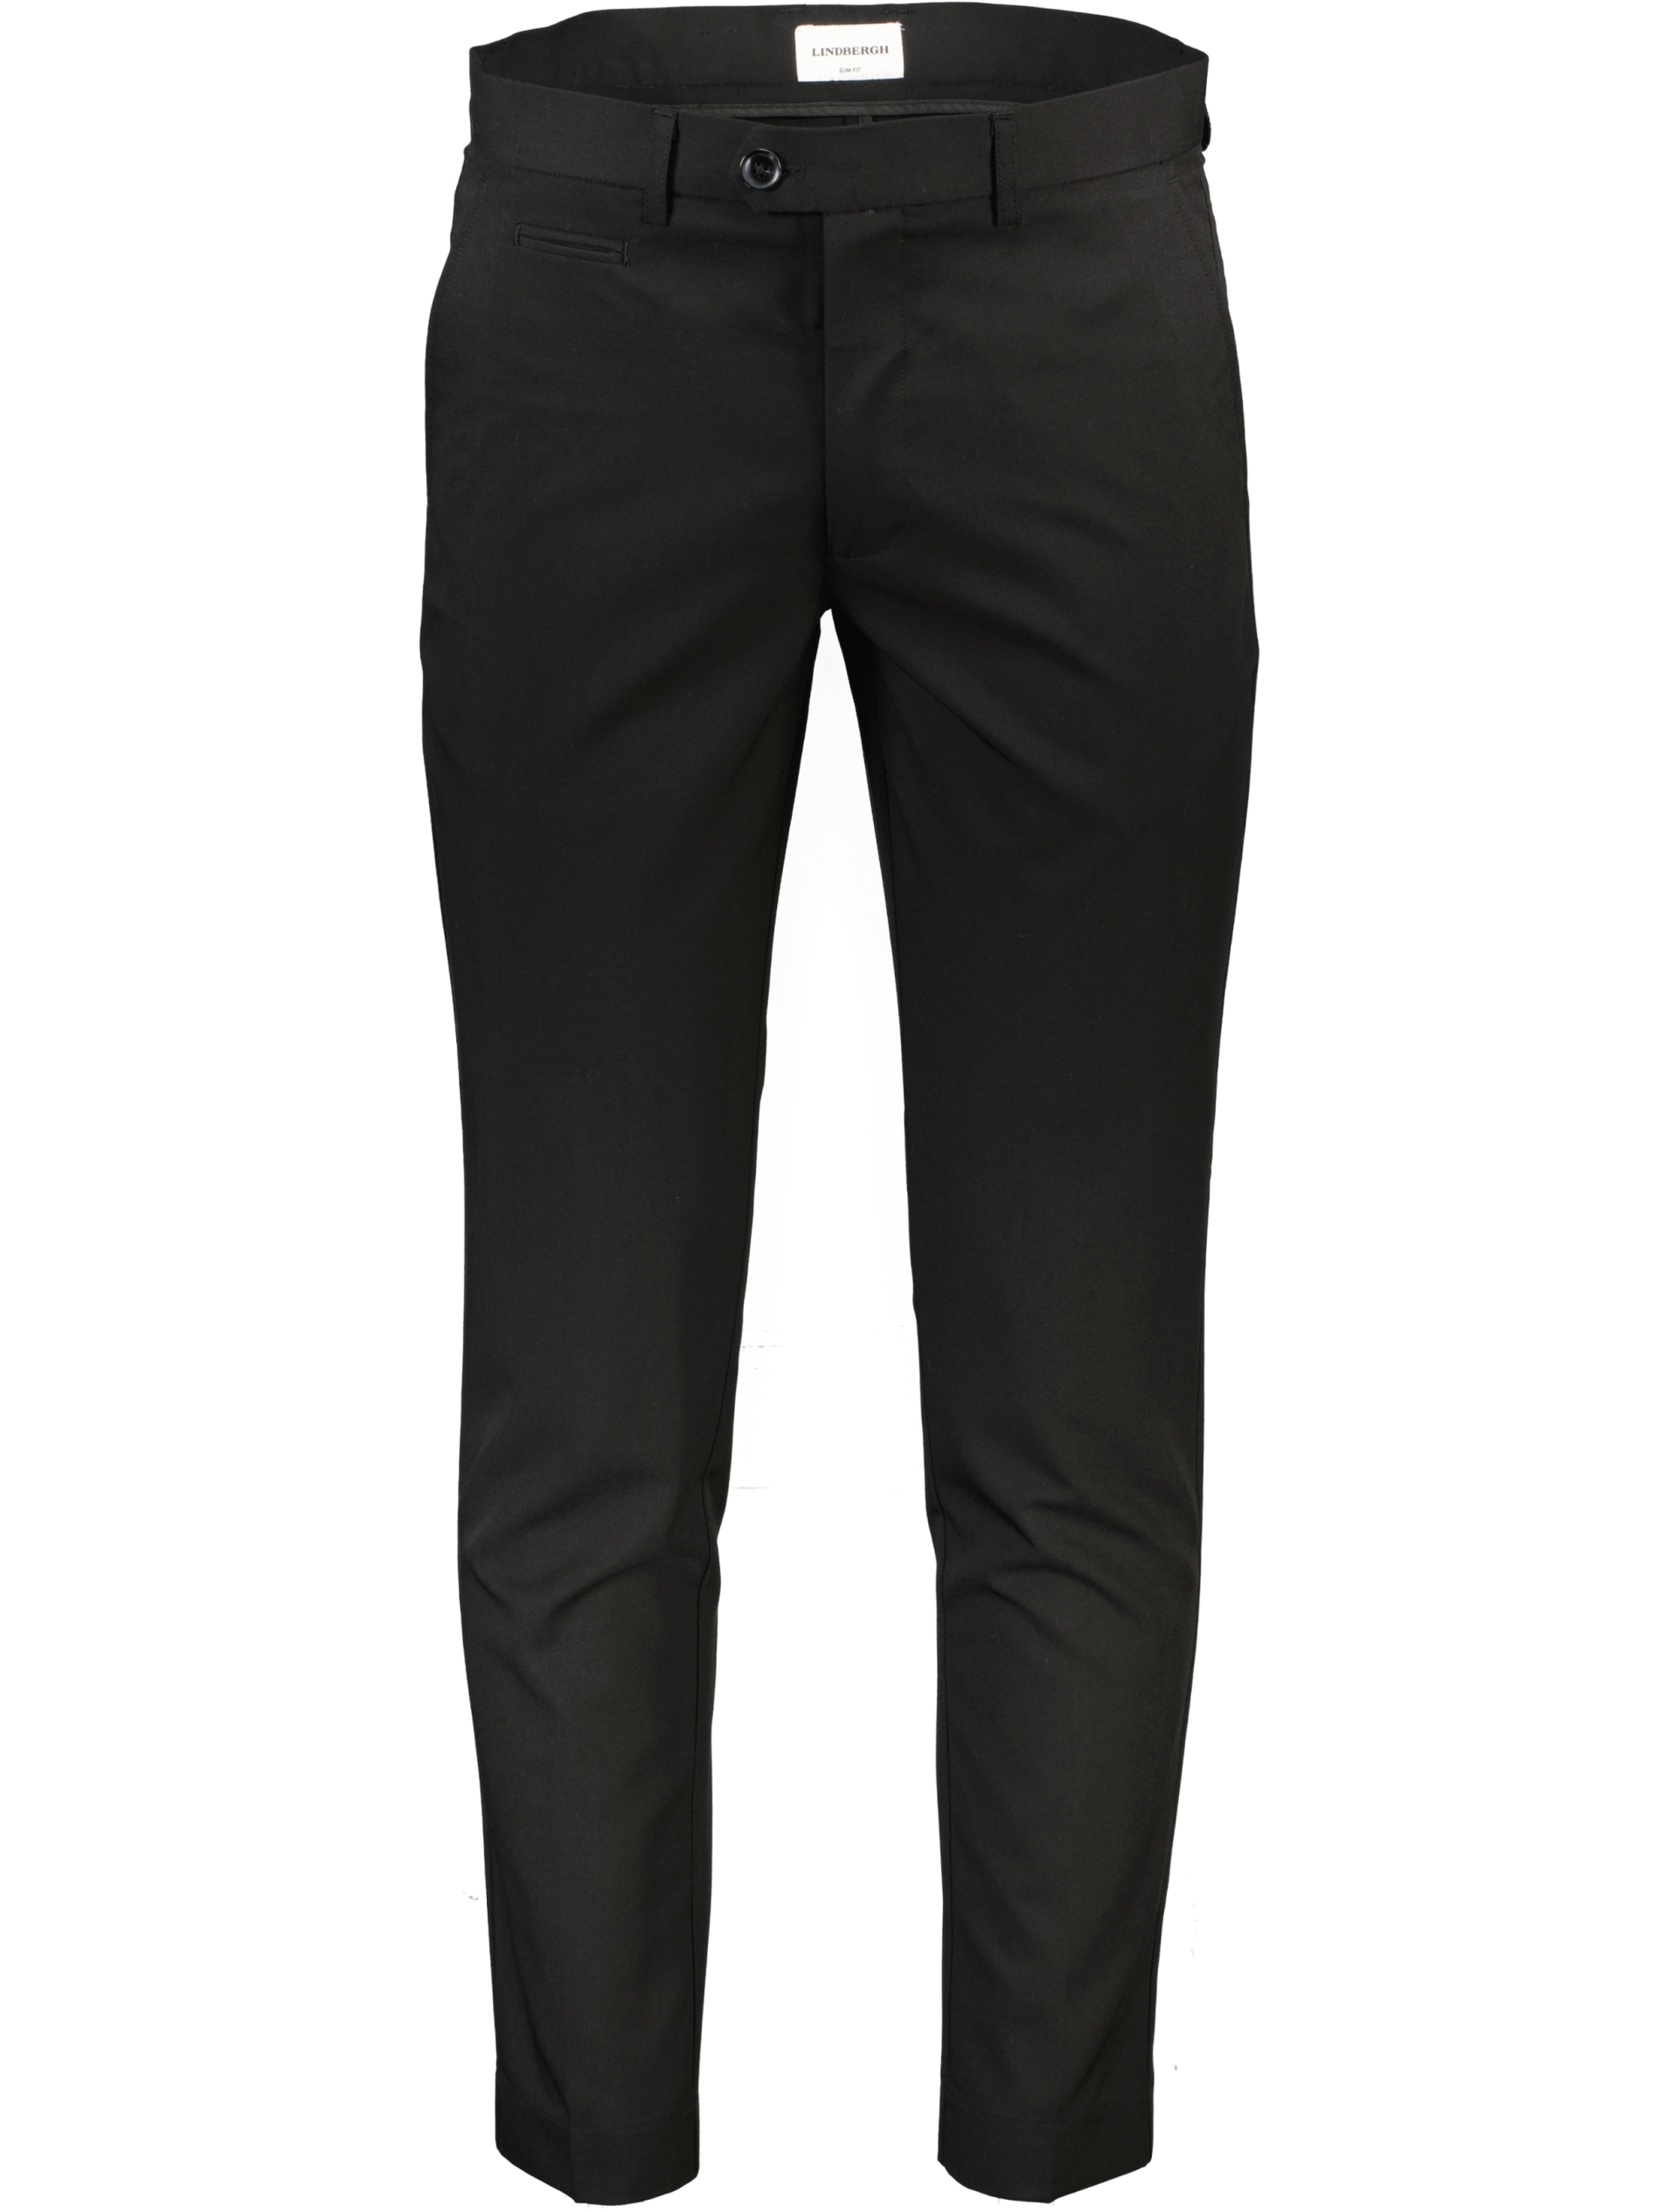 Lindbergh Club pants sort / black